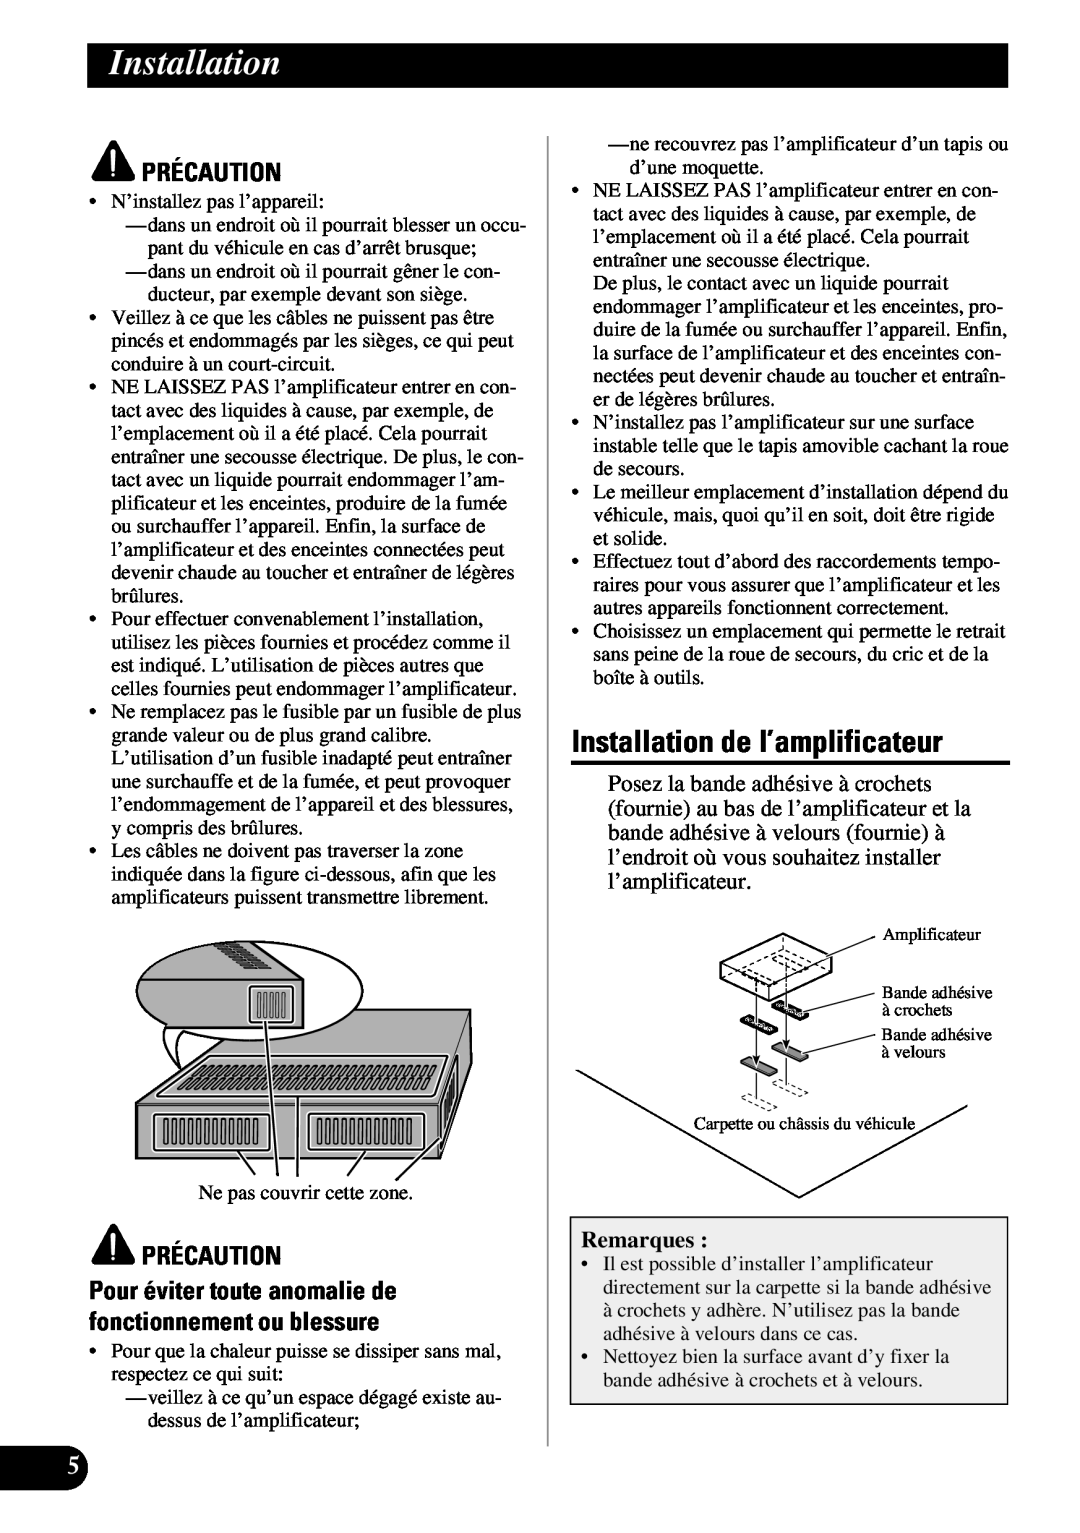 Pioneer ND-G500 owner manual Installation de l’amplificateur, Remarques, Précaution 